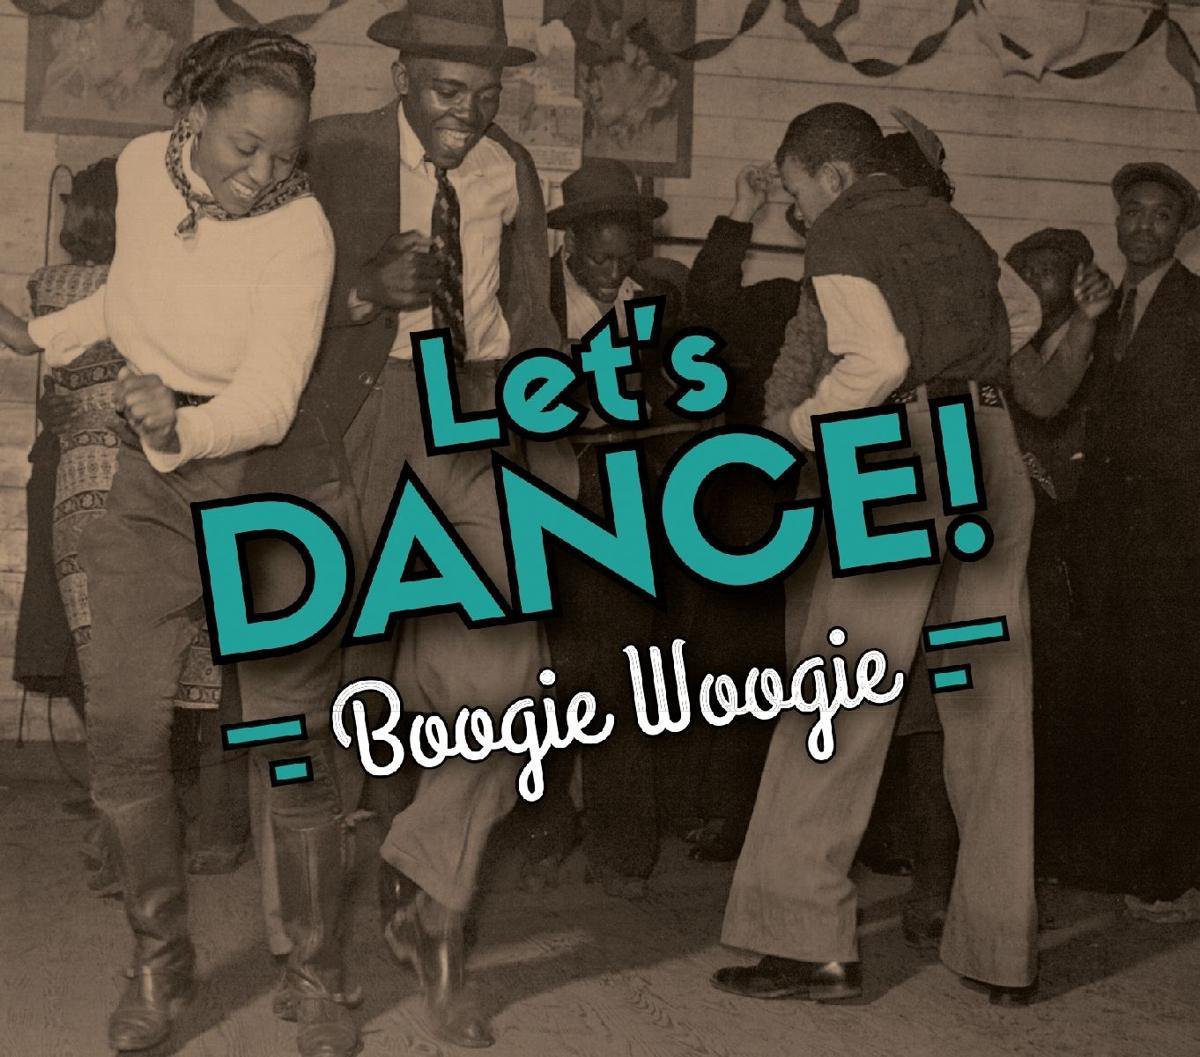 Boogie down танец